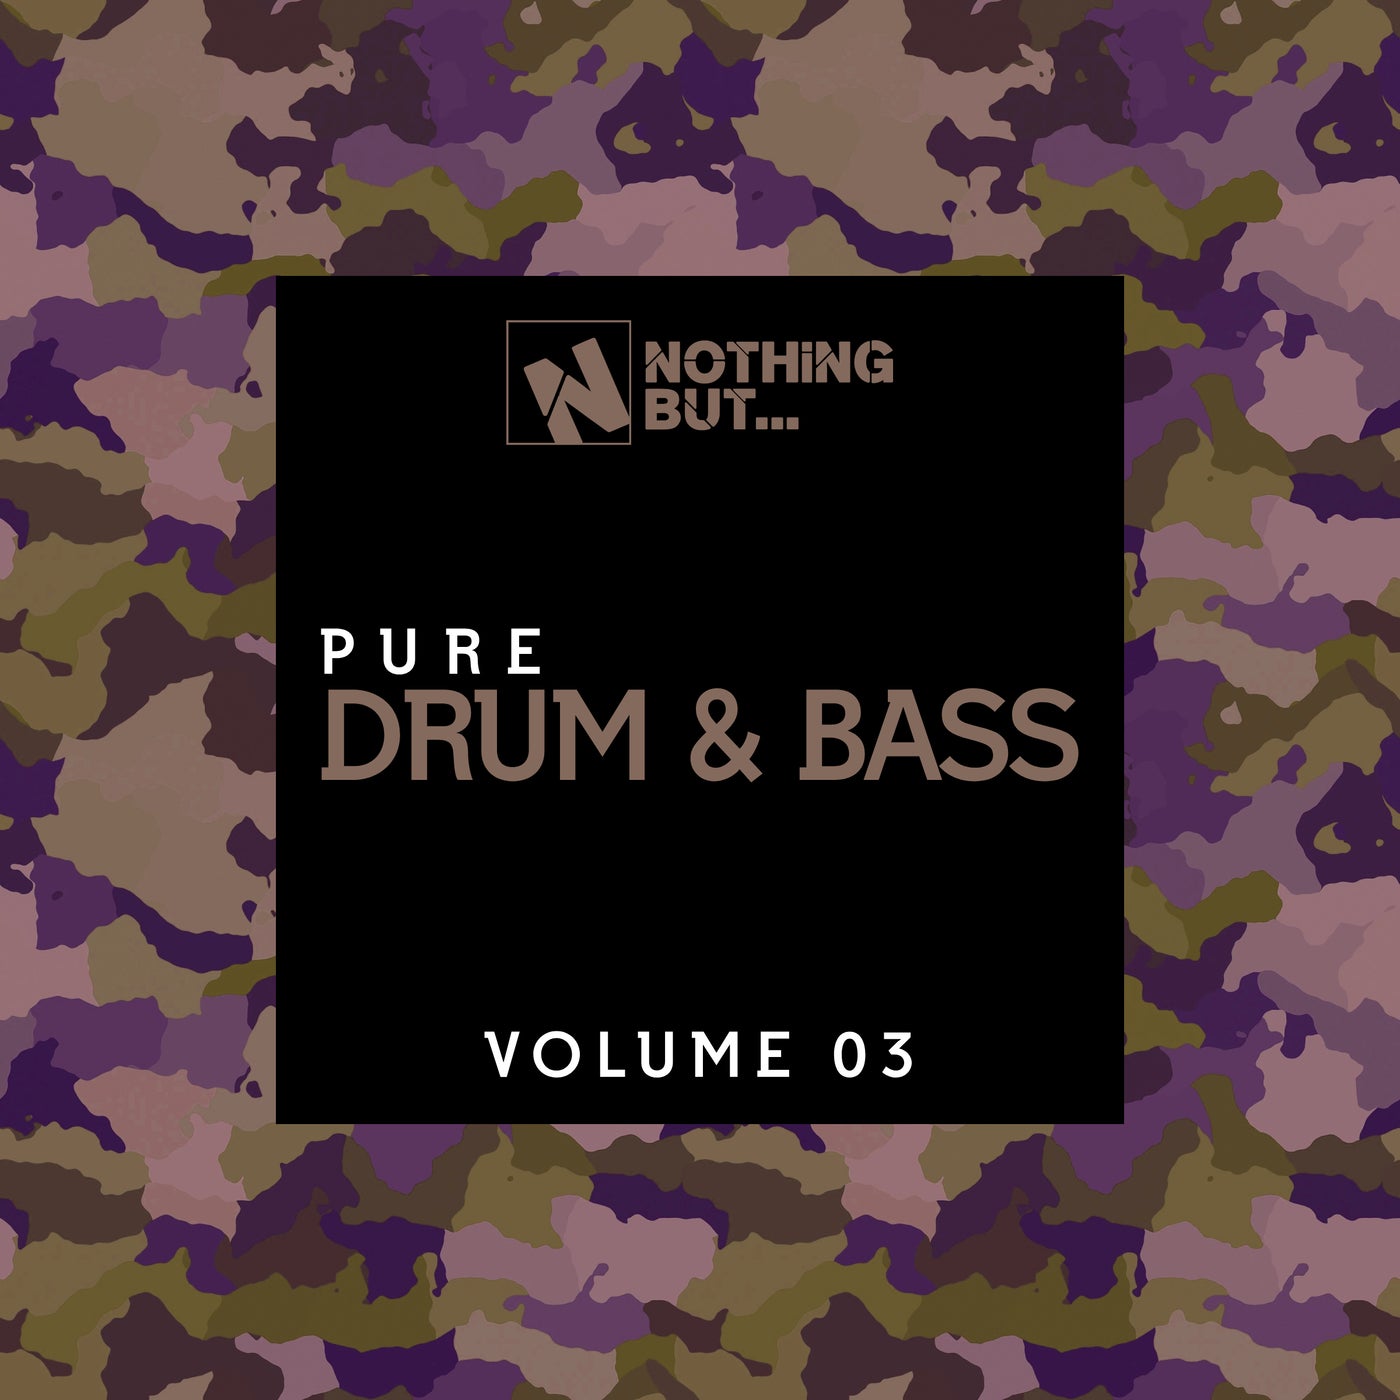 Download VA - Nothing But... Pure Drum & Bass, Vol. 03 [NBPDNB03] mp3